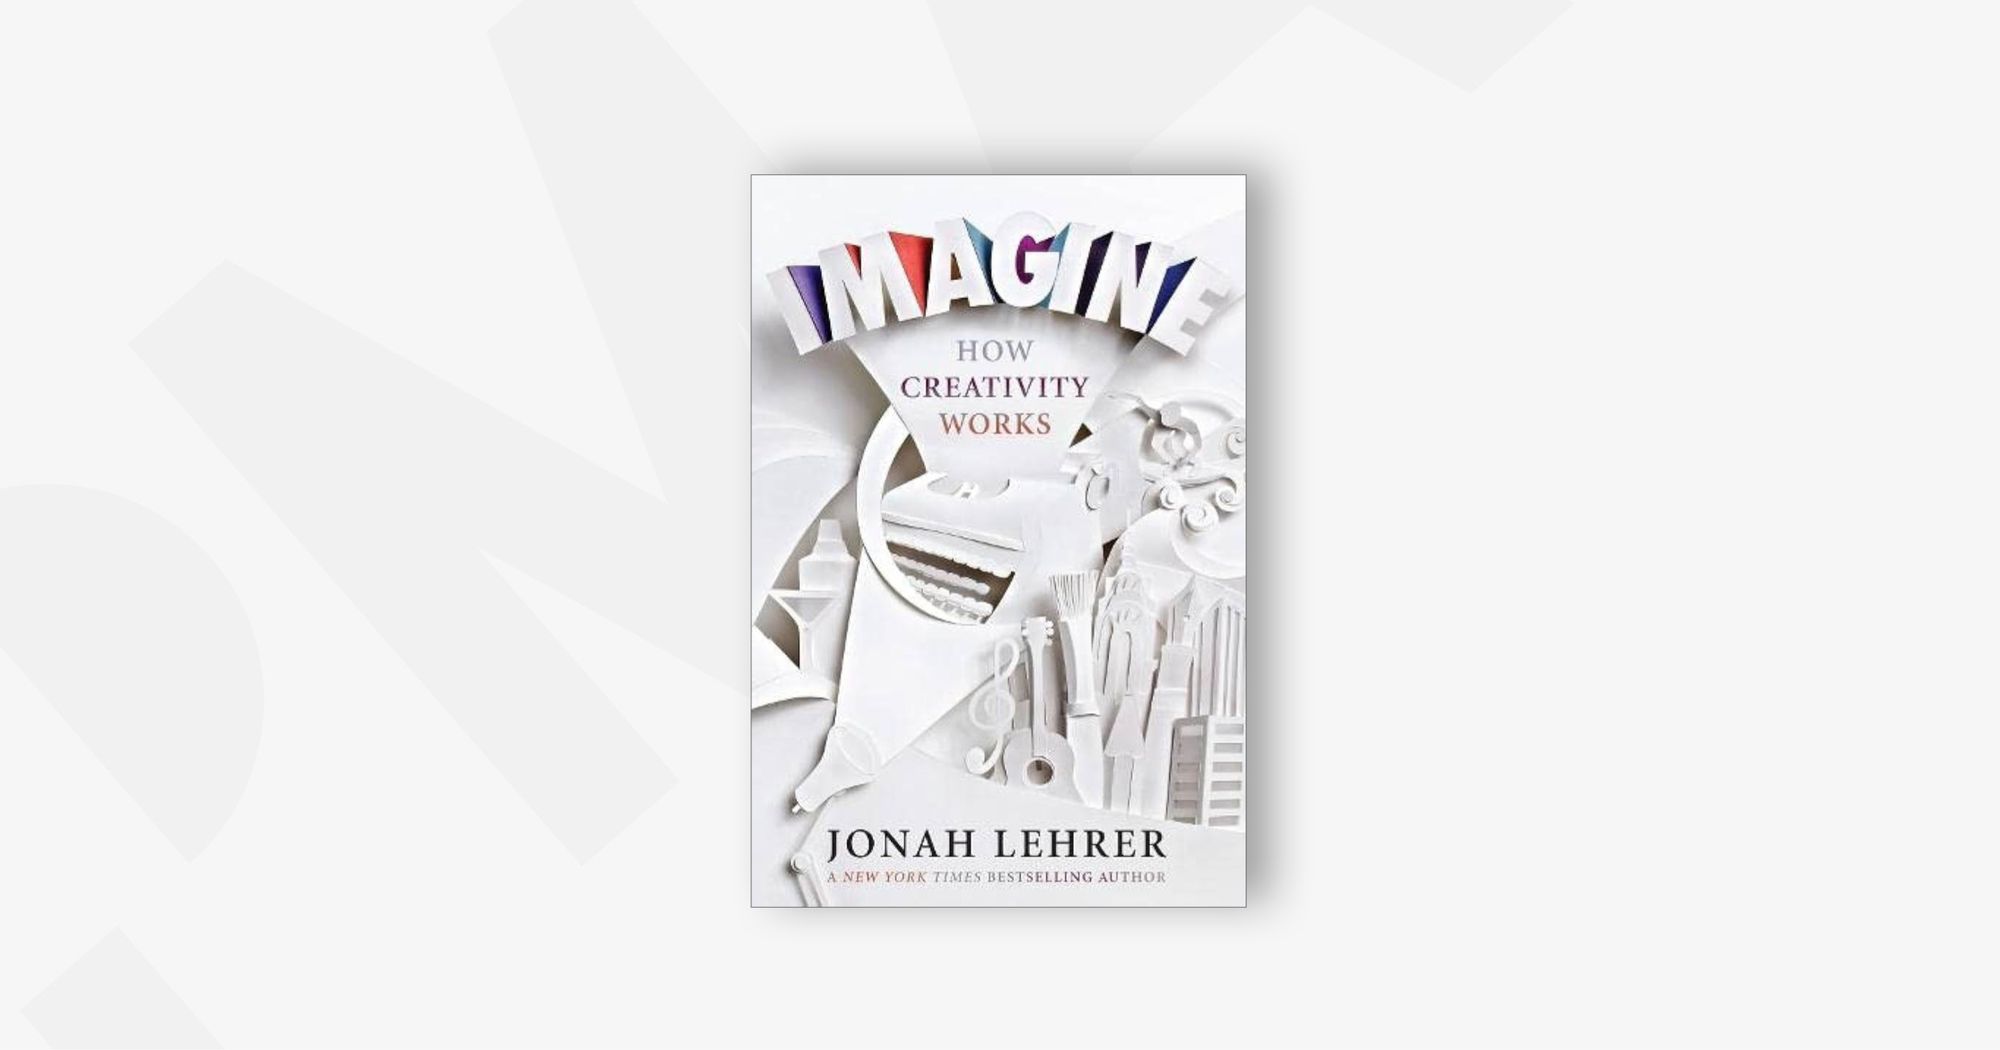 Imagine: How Creativity Works - Jonah Lehrer